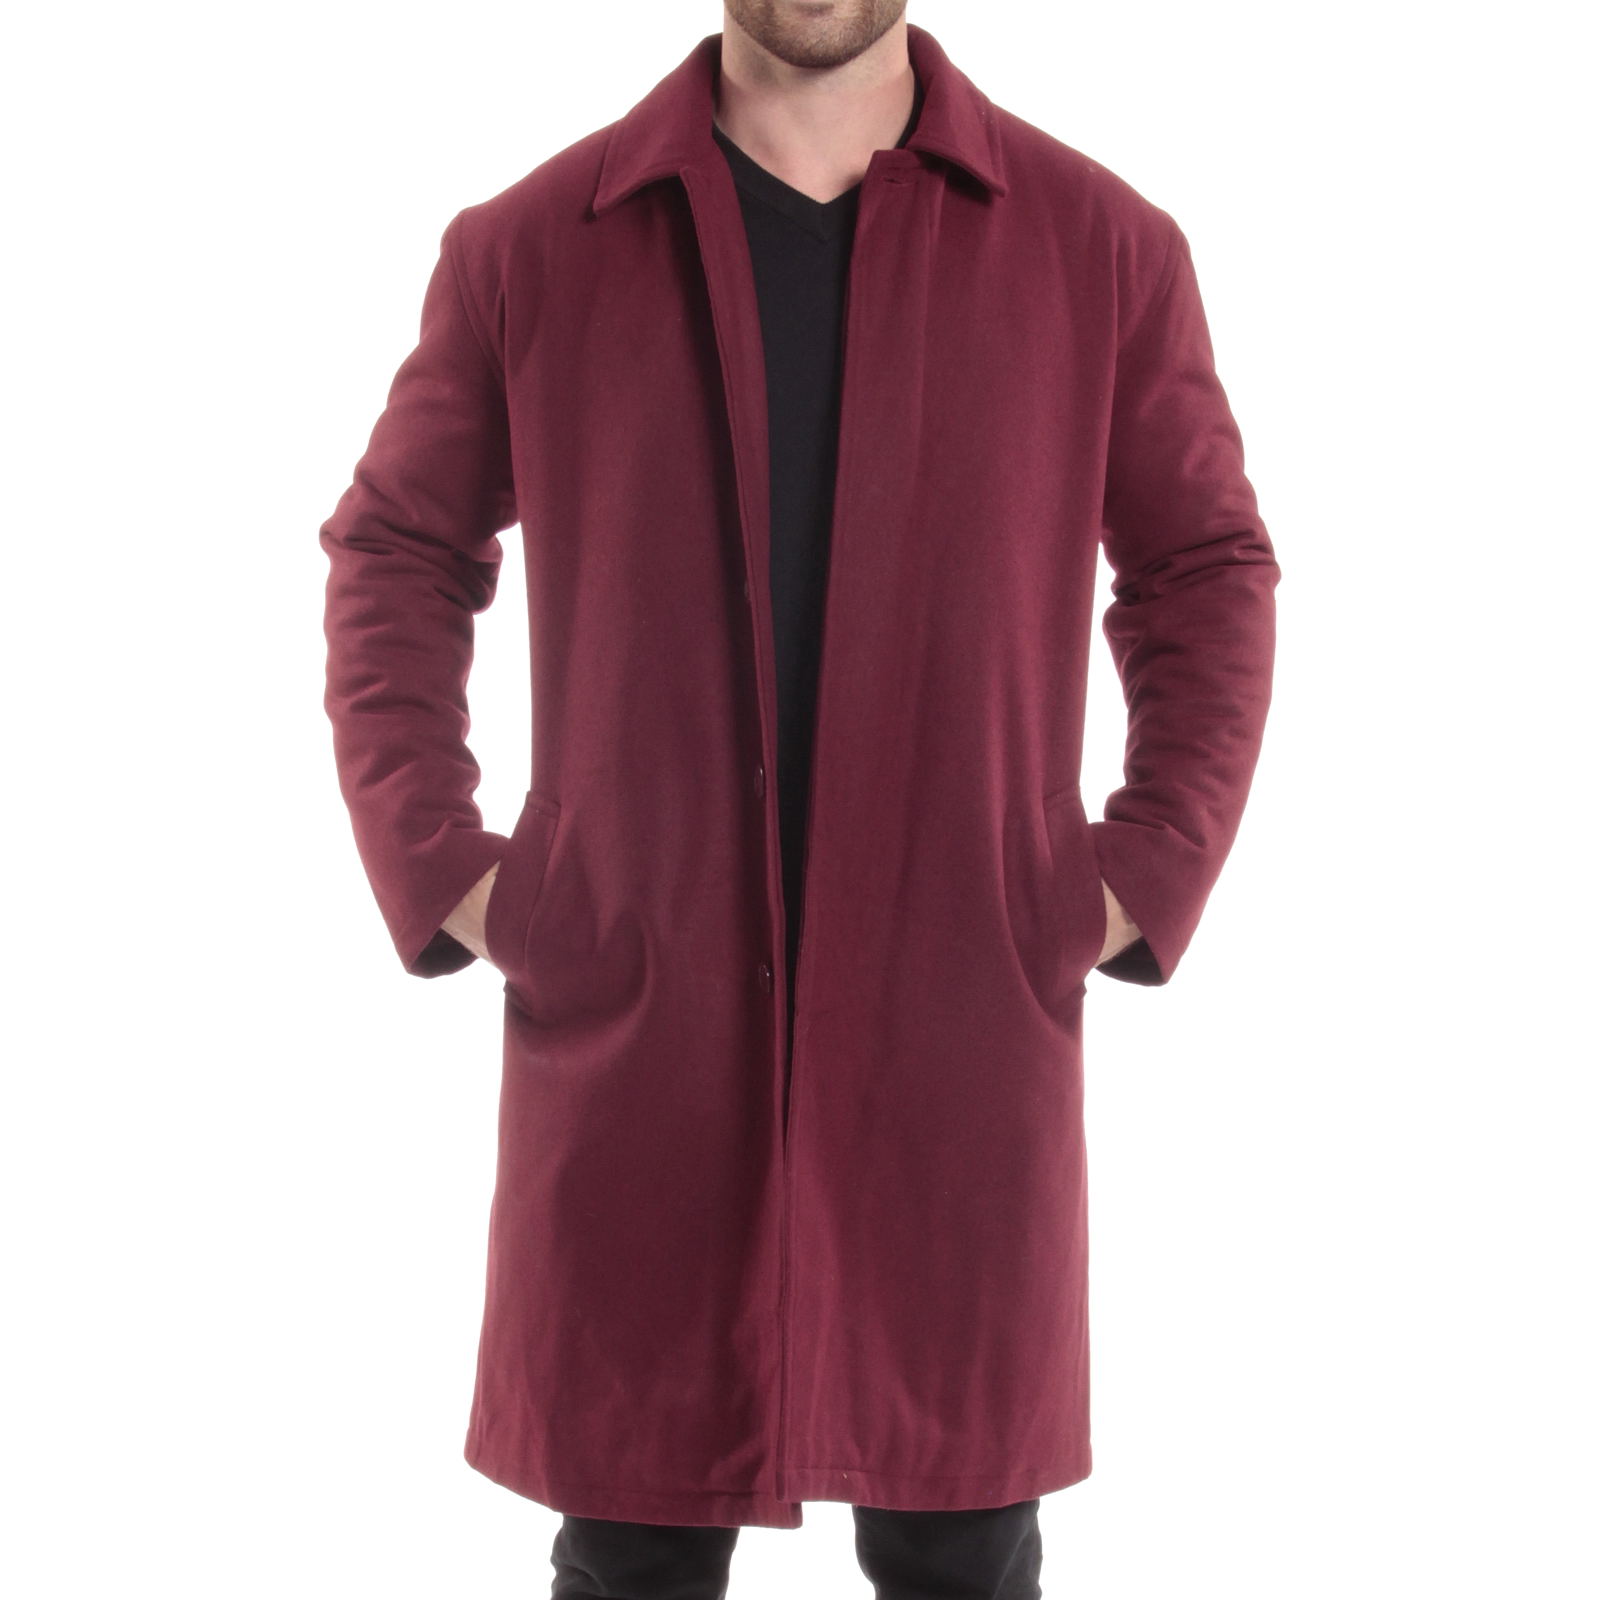 Alpine Swiss Mens Zach Knee Length Jacket Top Coat Trench Wool Blend Overcoat - image 2 of 7